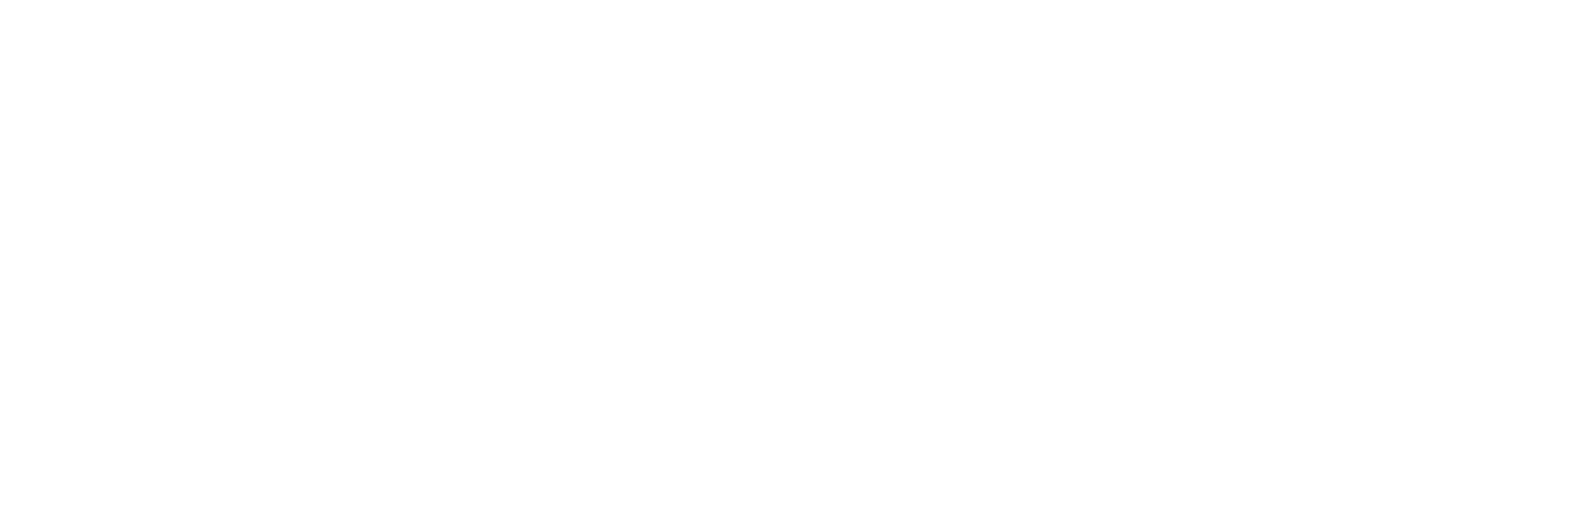 Weathernews Inc. Logo groß für dunkle Hintergründe (transparentes PNG)